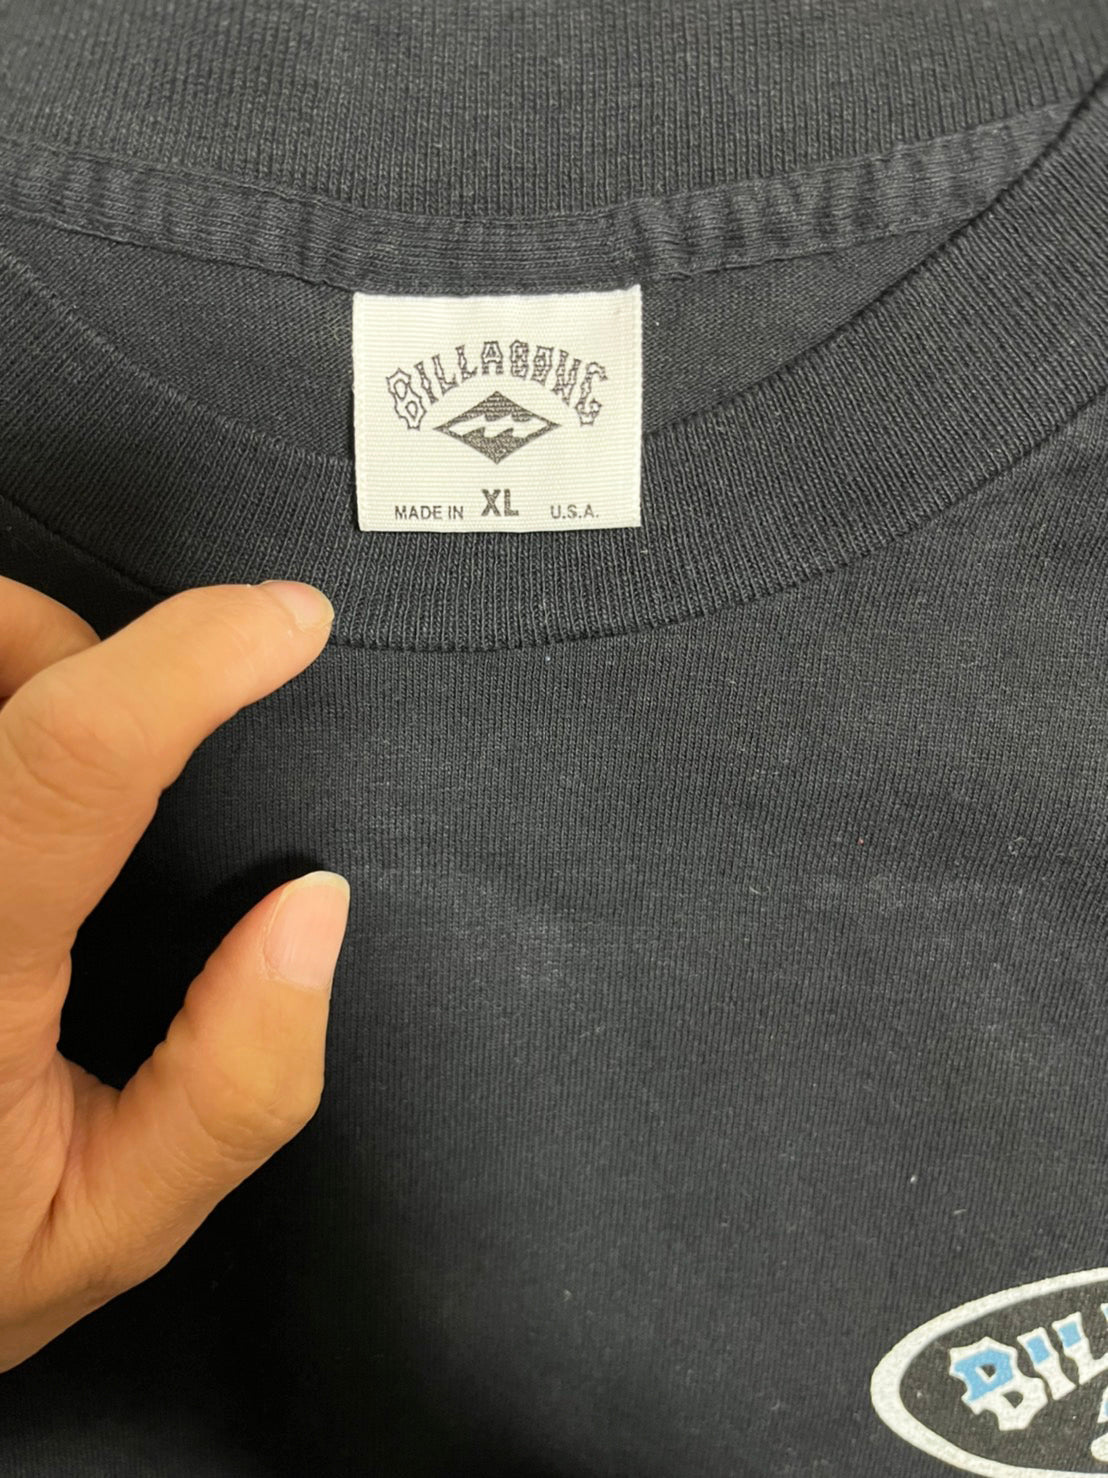 【Billabong】vintage surf 90’s Billabong Big logo T-shirt （men's XL)